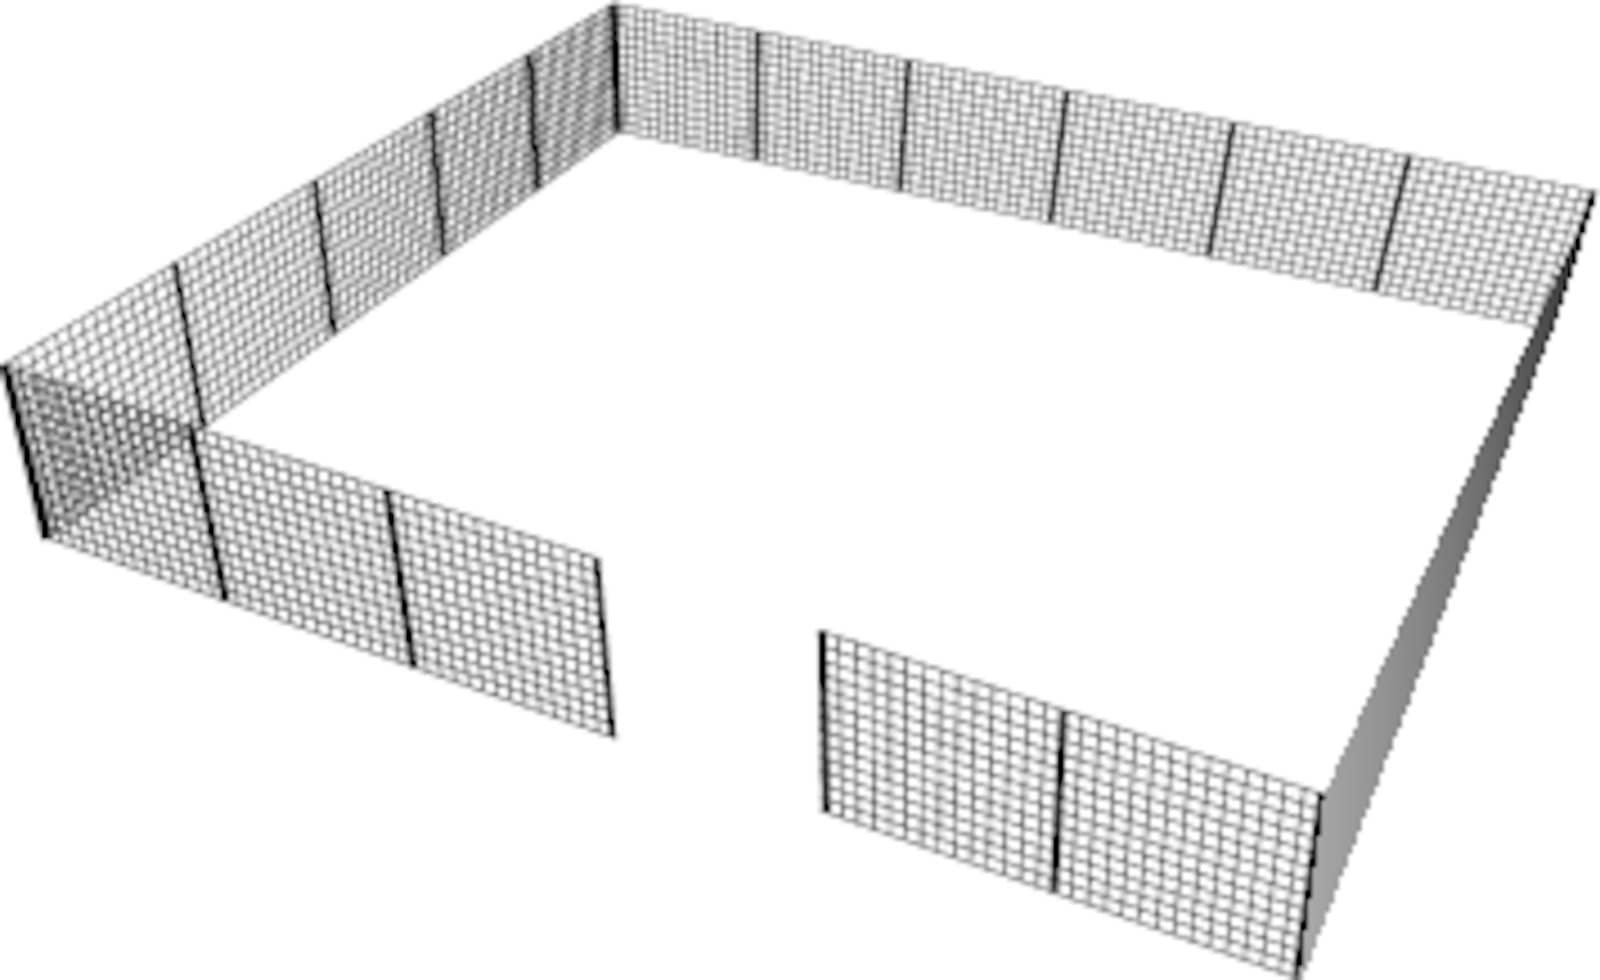 Open rectangular fence of net sections. Vector illustration.